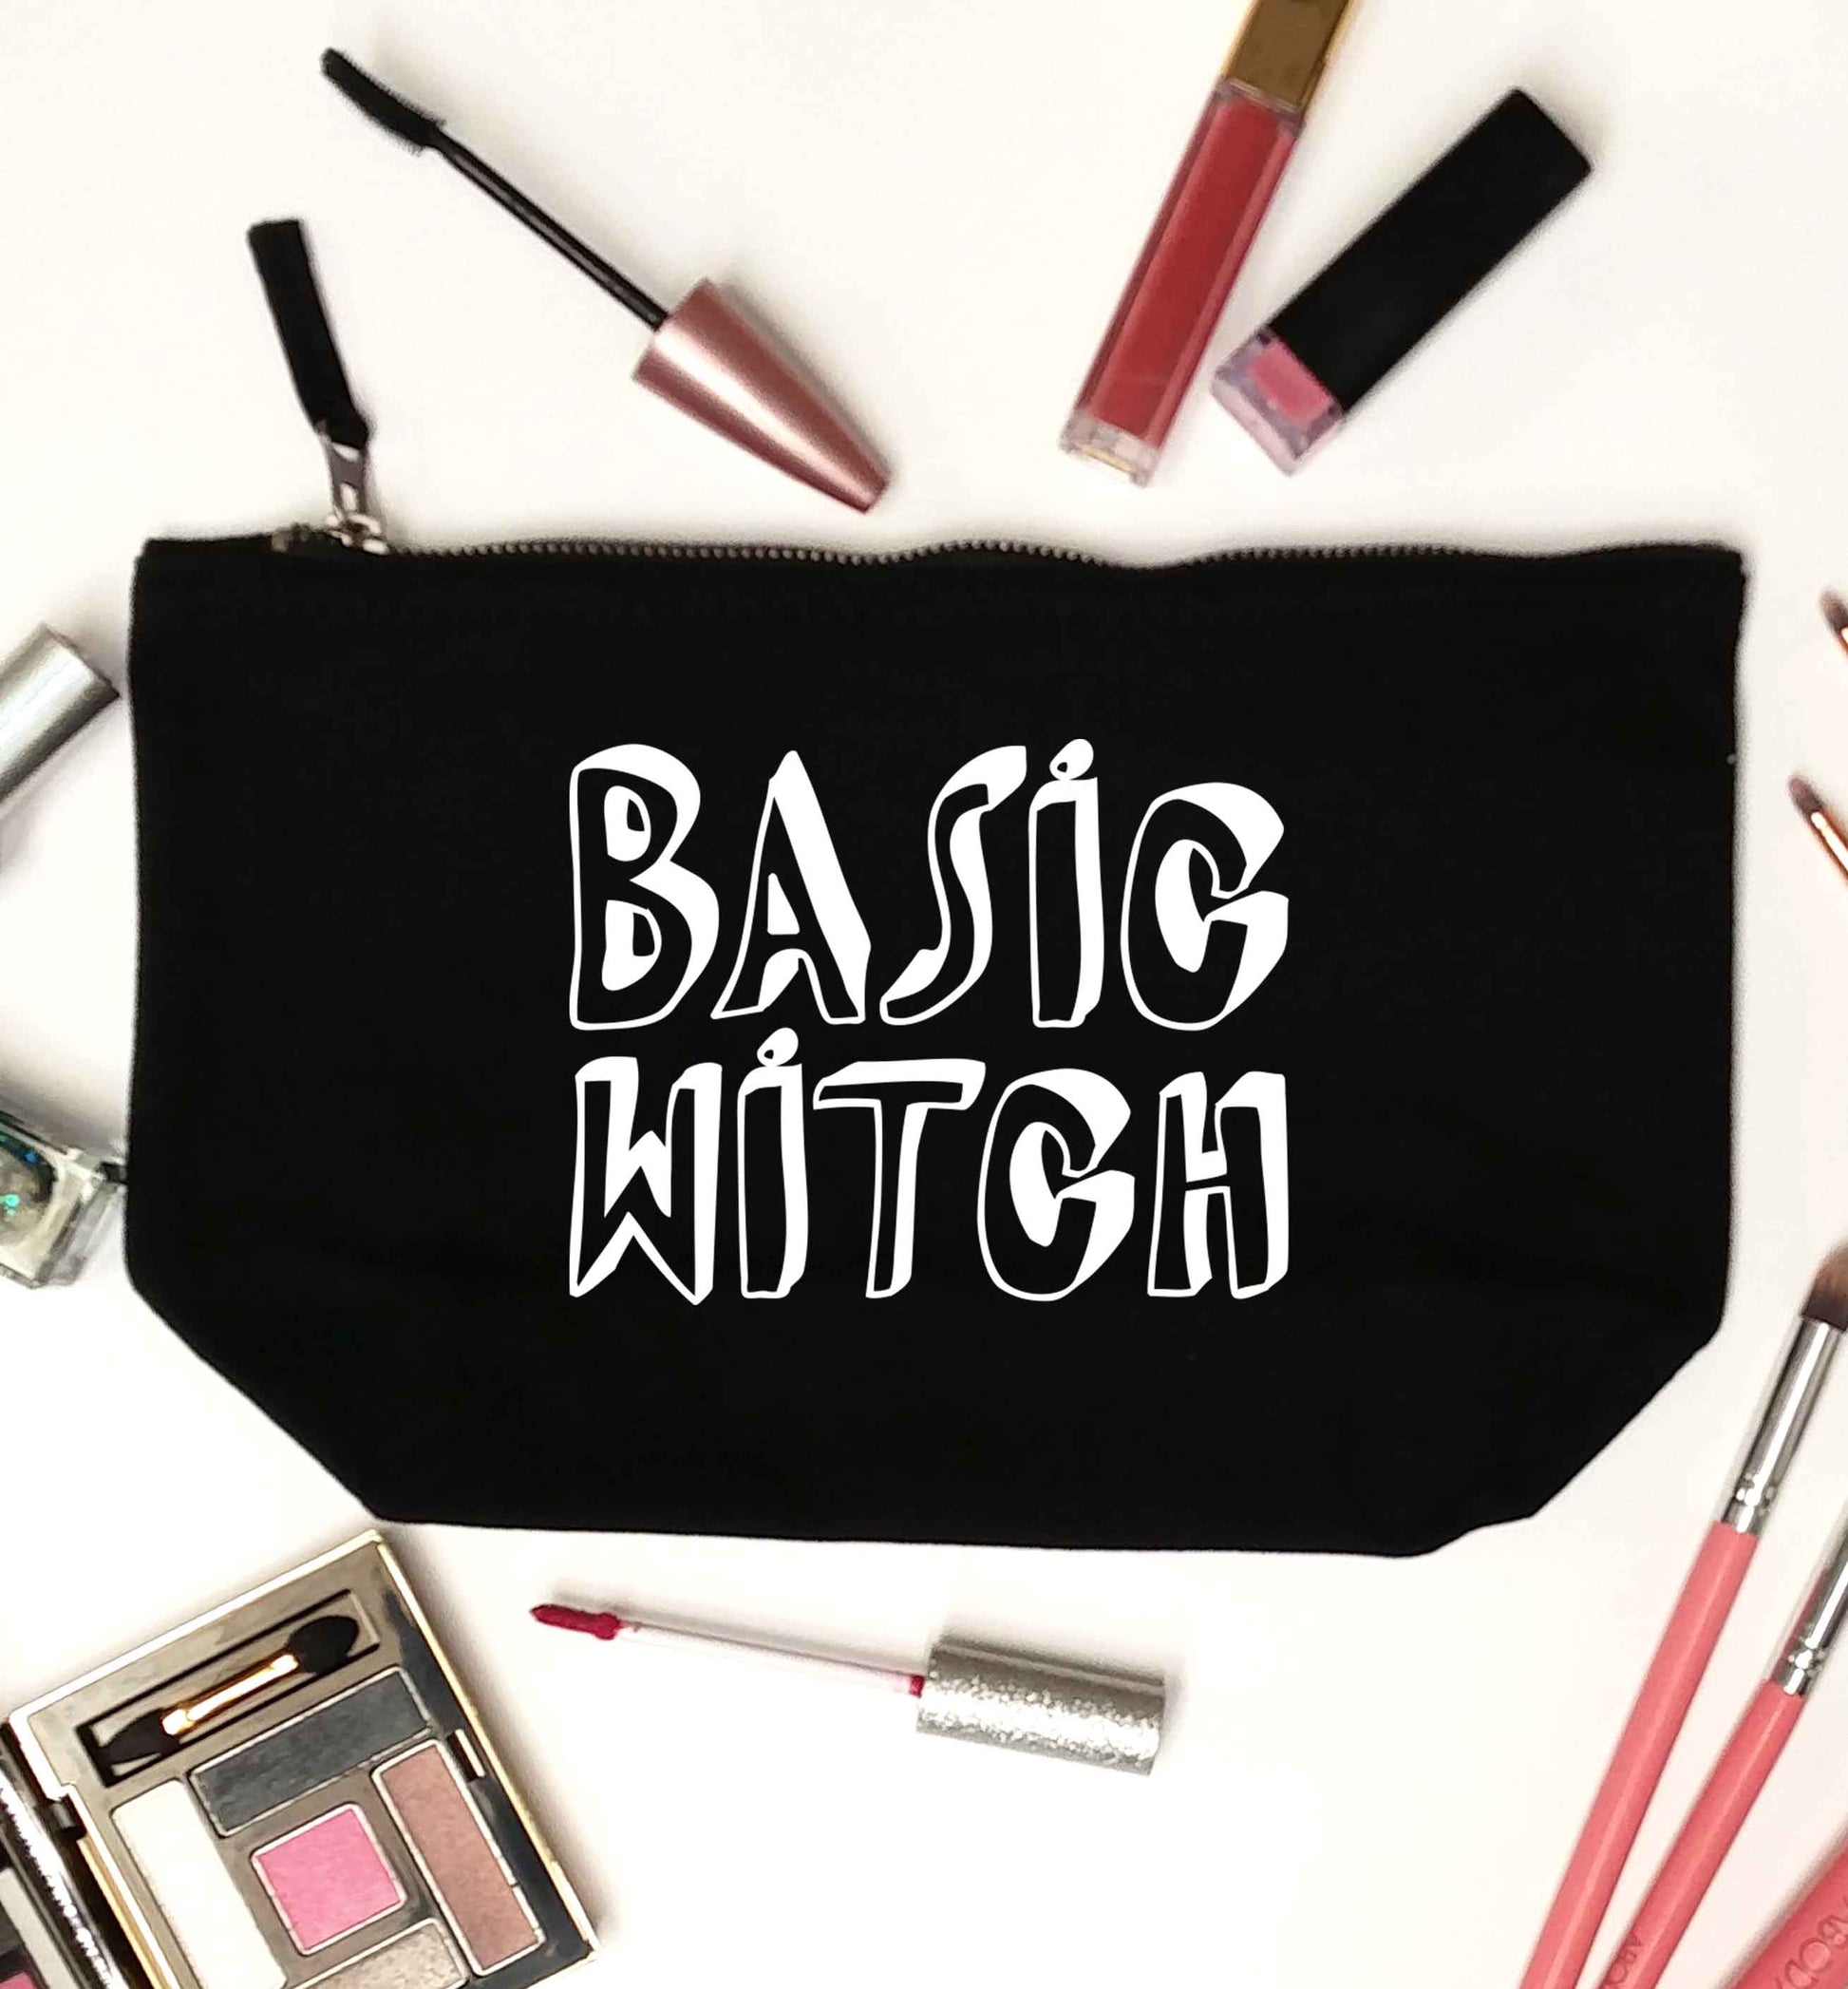 Basic witch black makeup bag